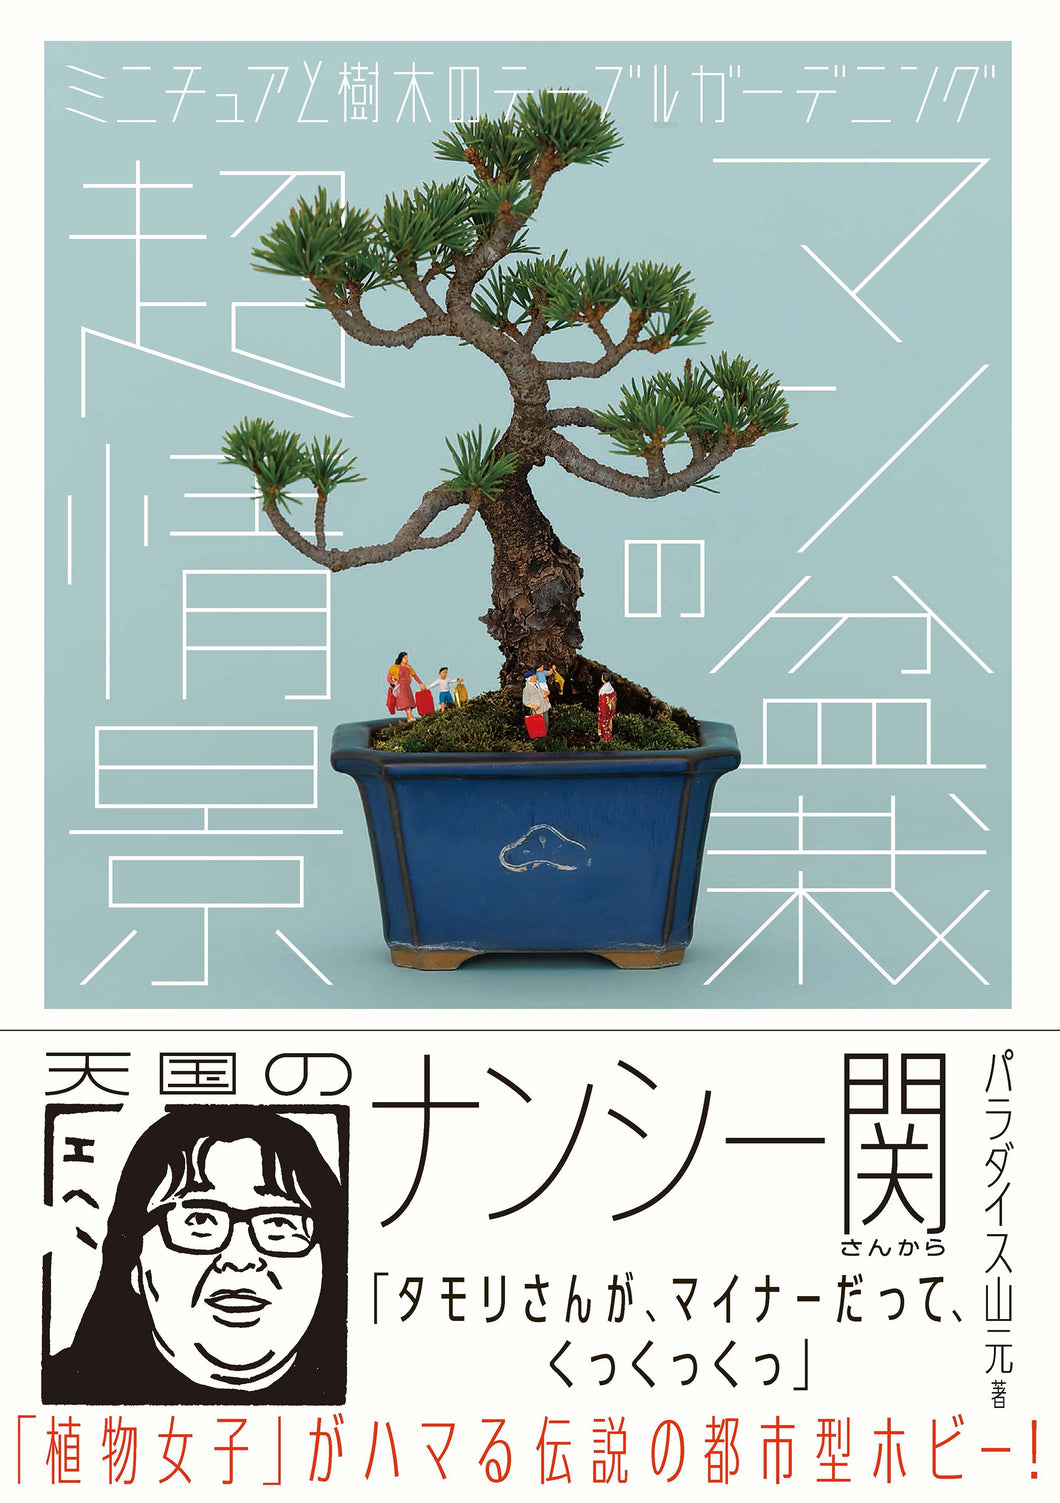 Super scene of man bonsai